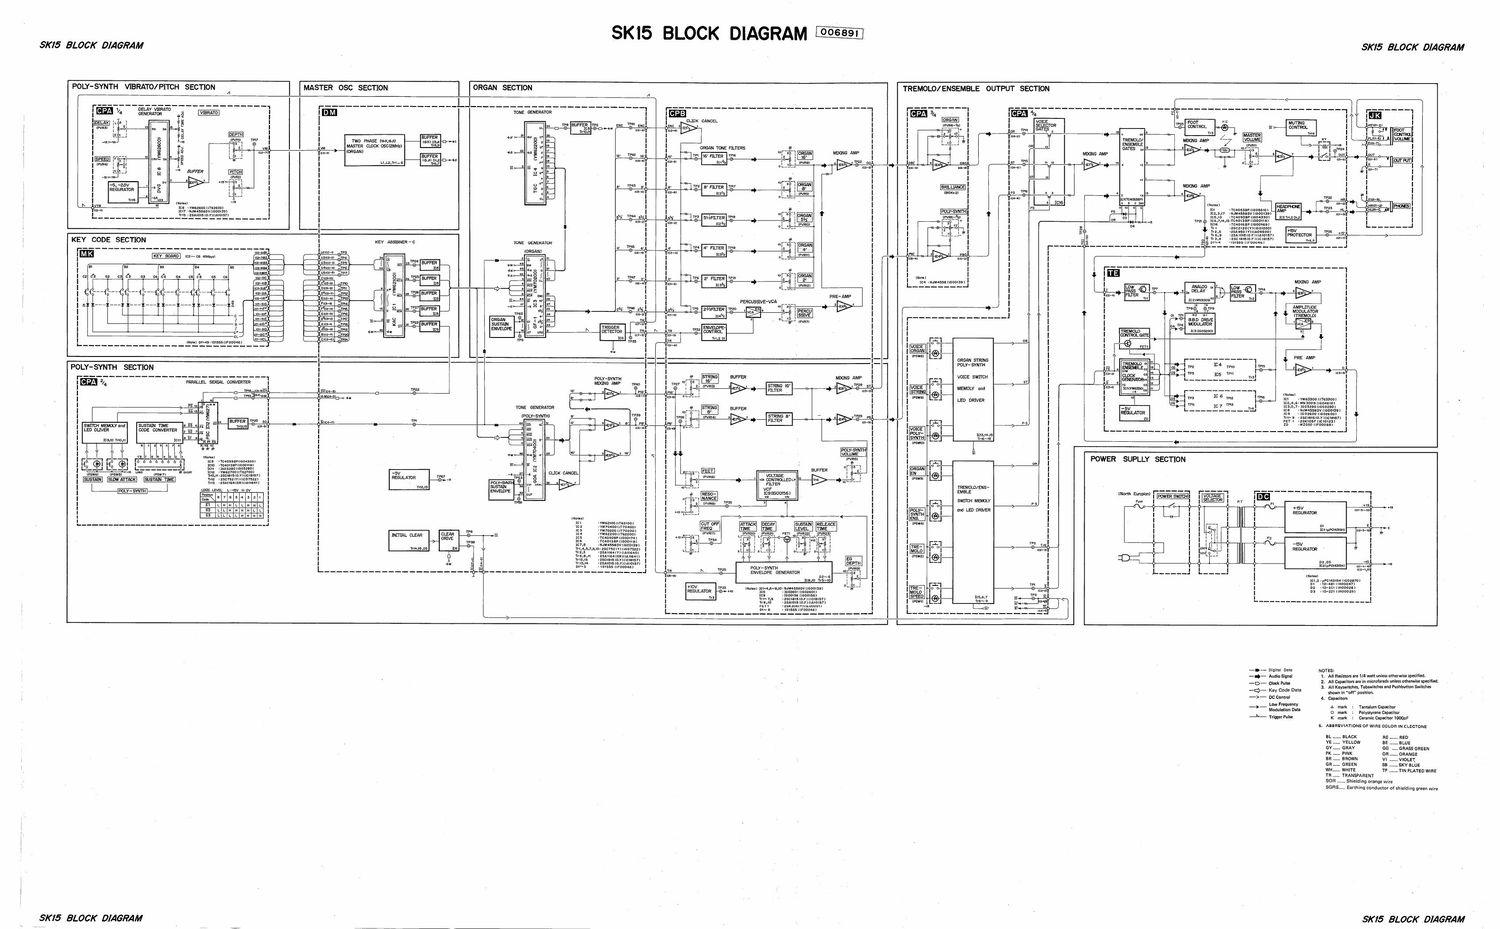 Yamaha SK 15 Block Diagram